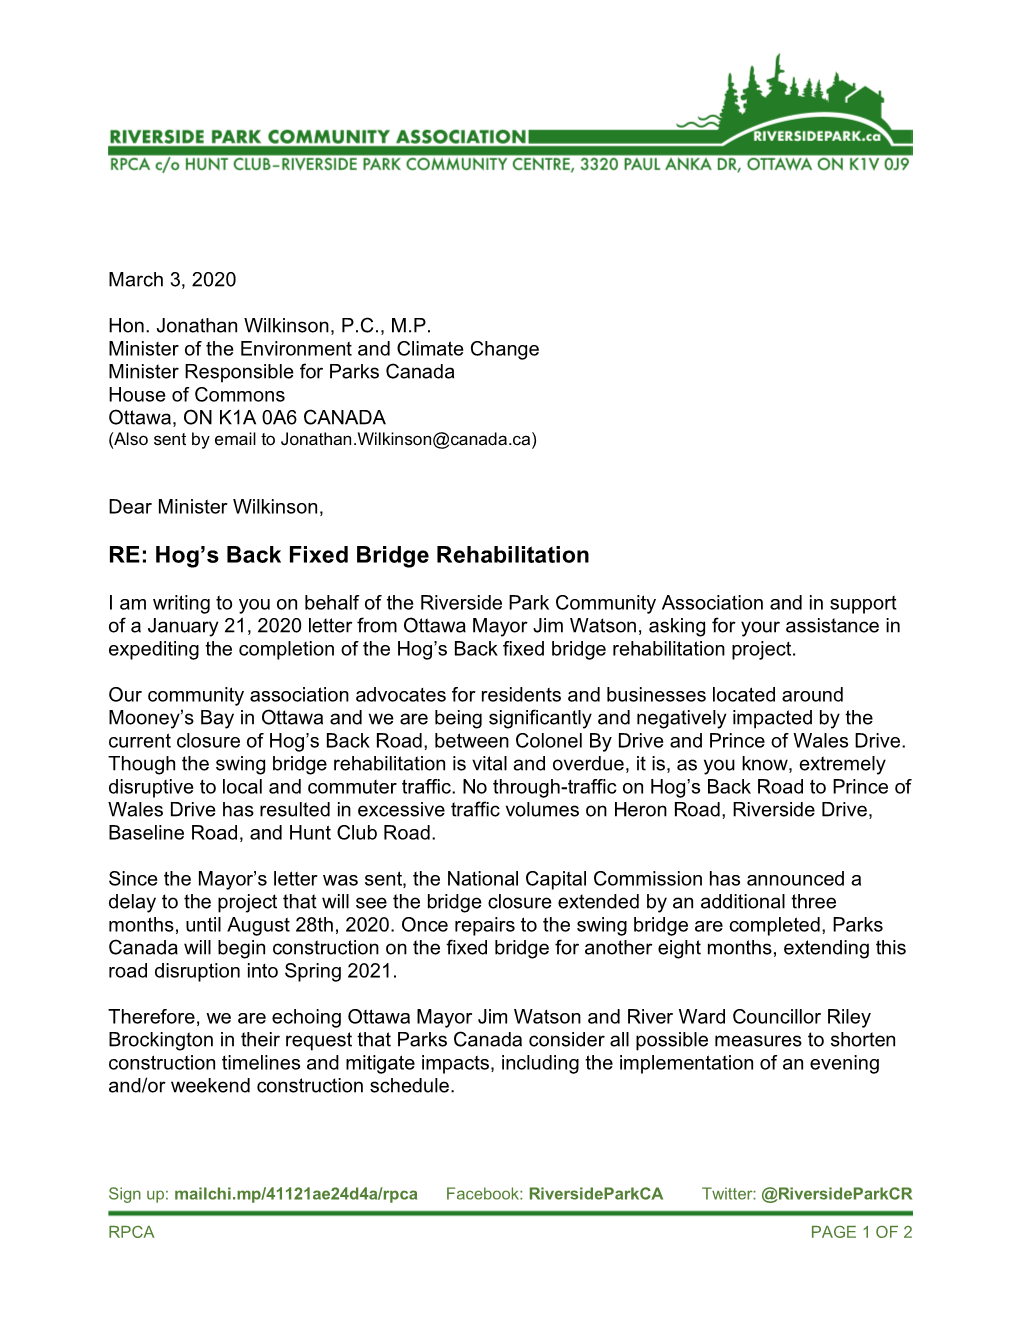 RE: Hog's Back Fixed Bridge Rehabilitation